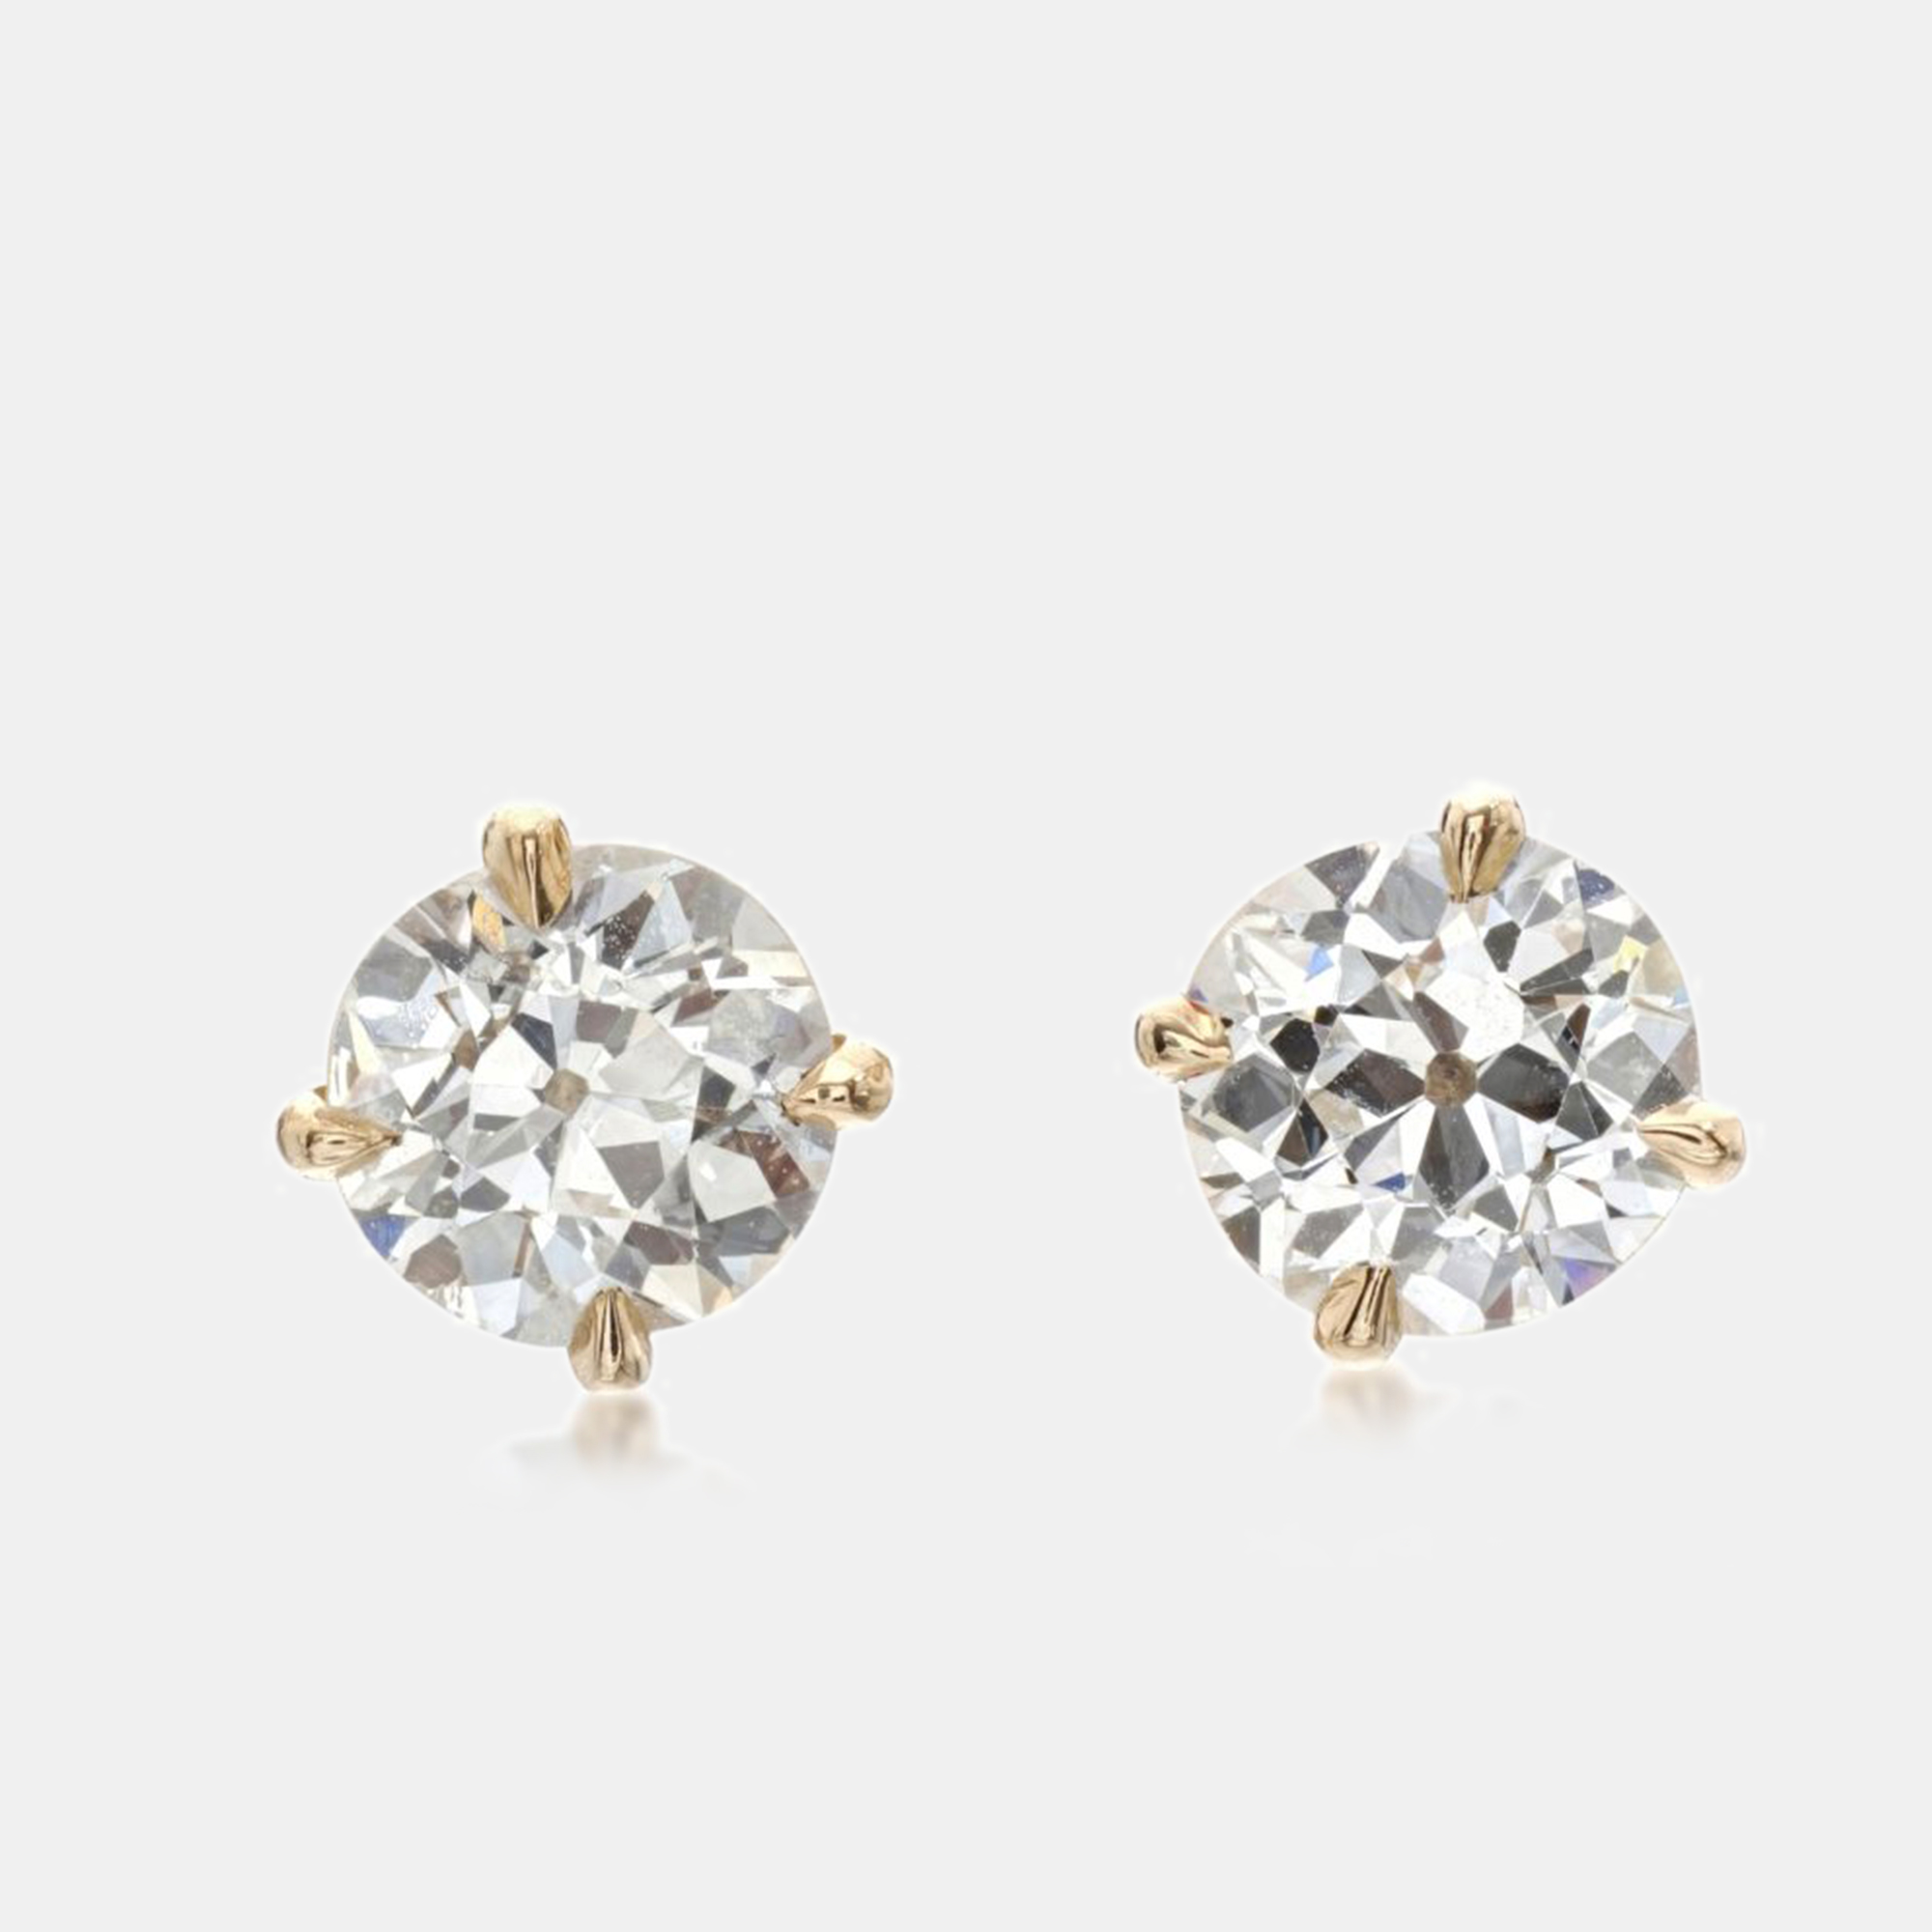 The diamond edit 18k yellow gold diamonds 1.60 ct. stud earrings